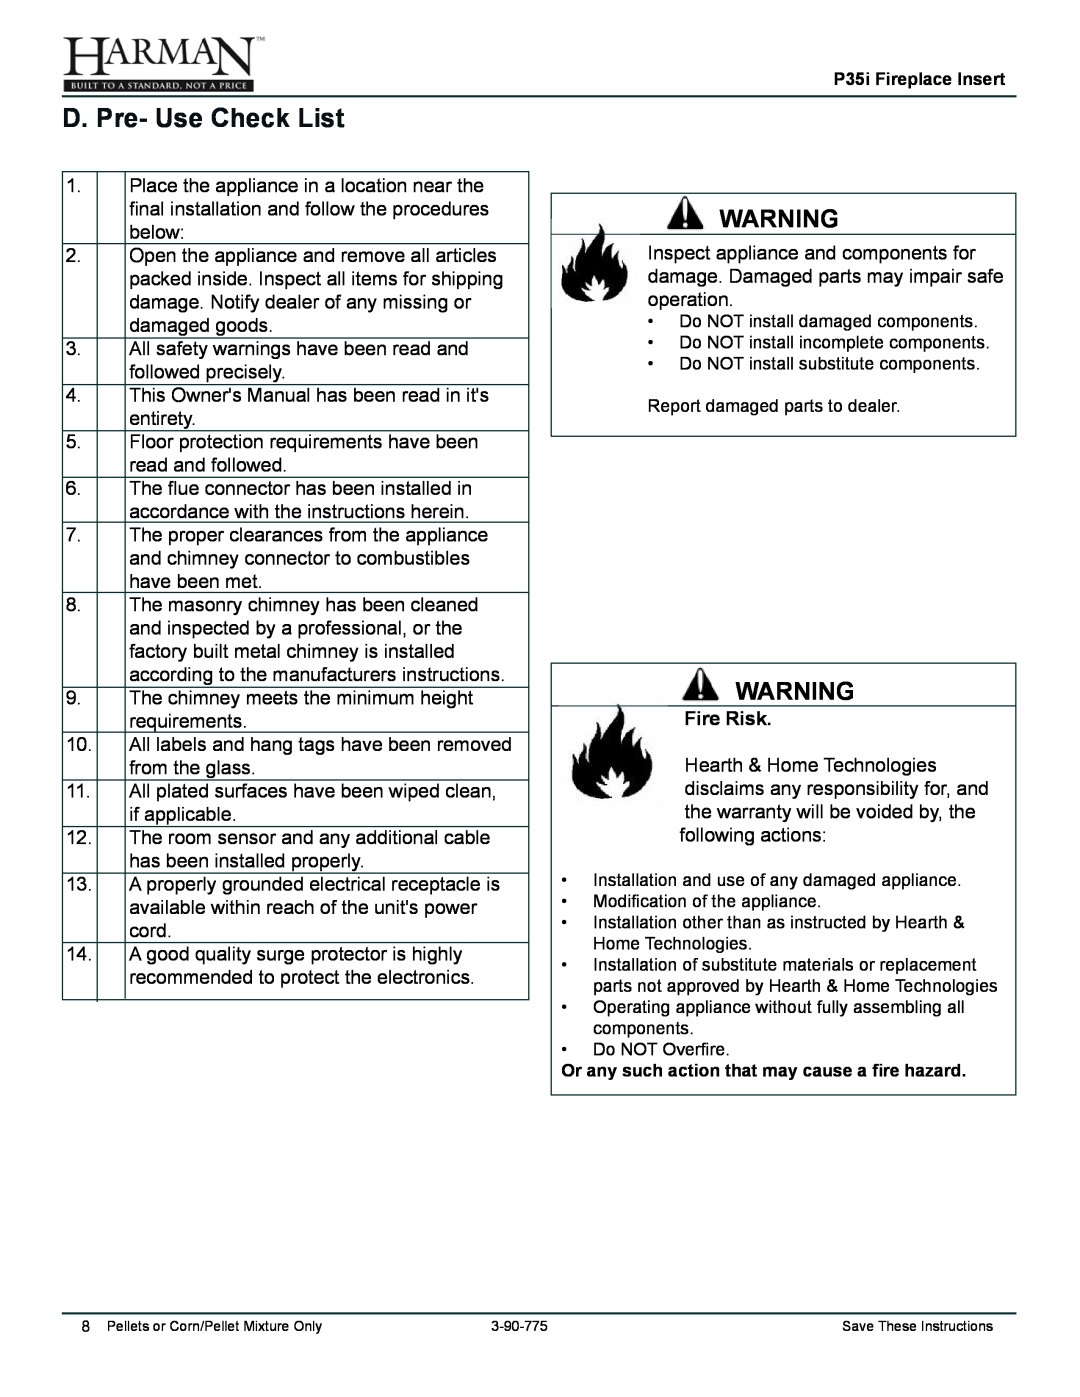 Harman Stove Company P35I owner manual D. Pre- Use Check List, Fire Risk 